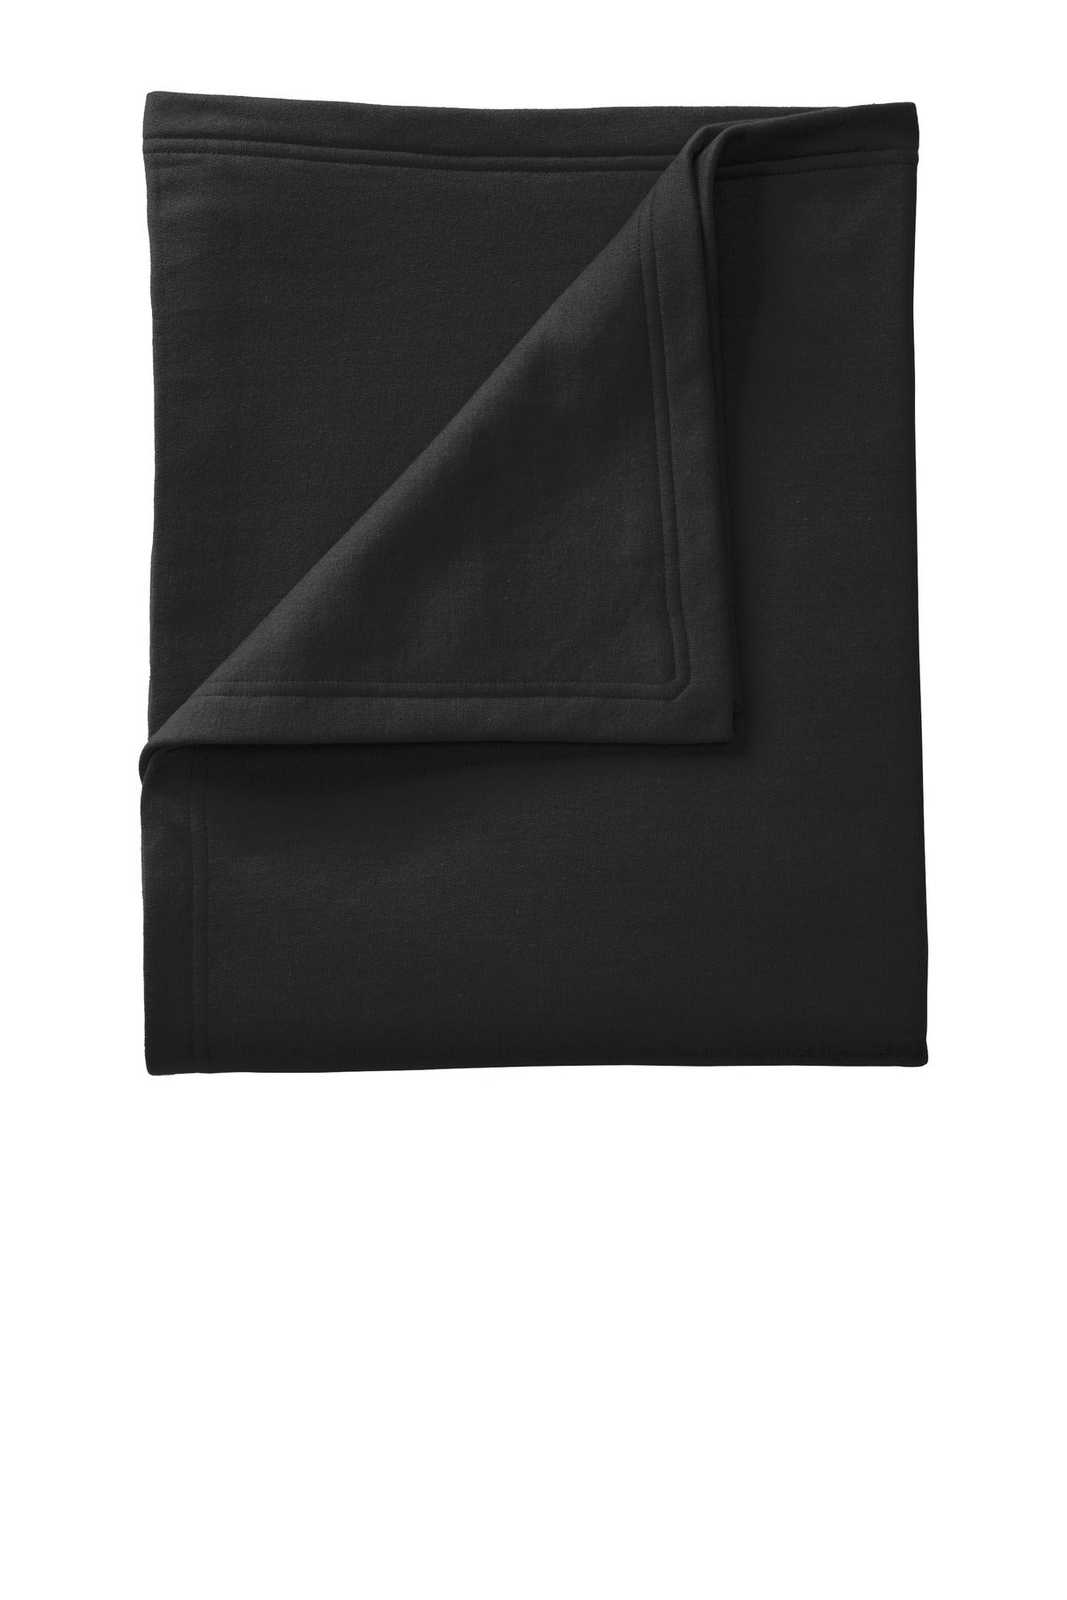 Port & Company BP78 Core Fleece Sweatshirt Blanket - Jet Black - HIT a Double - 1